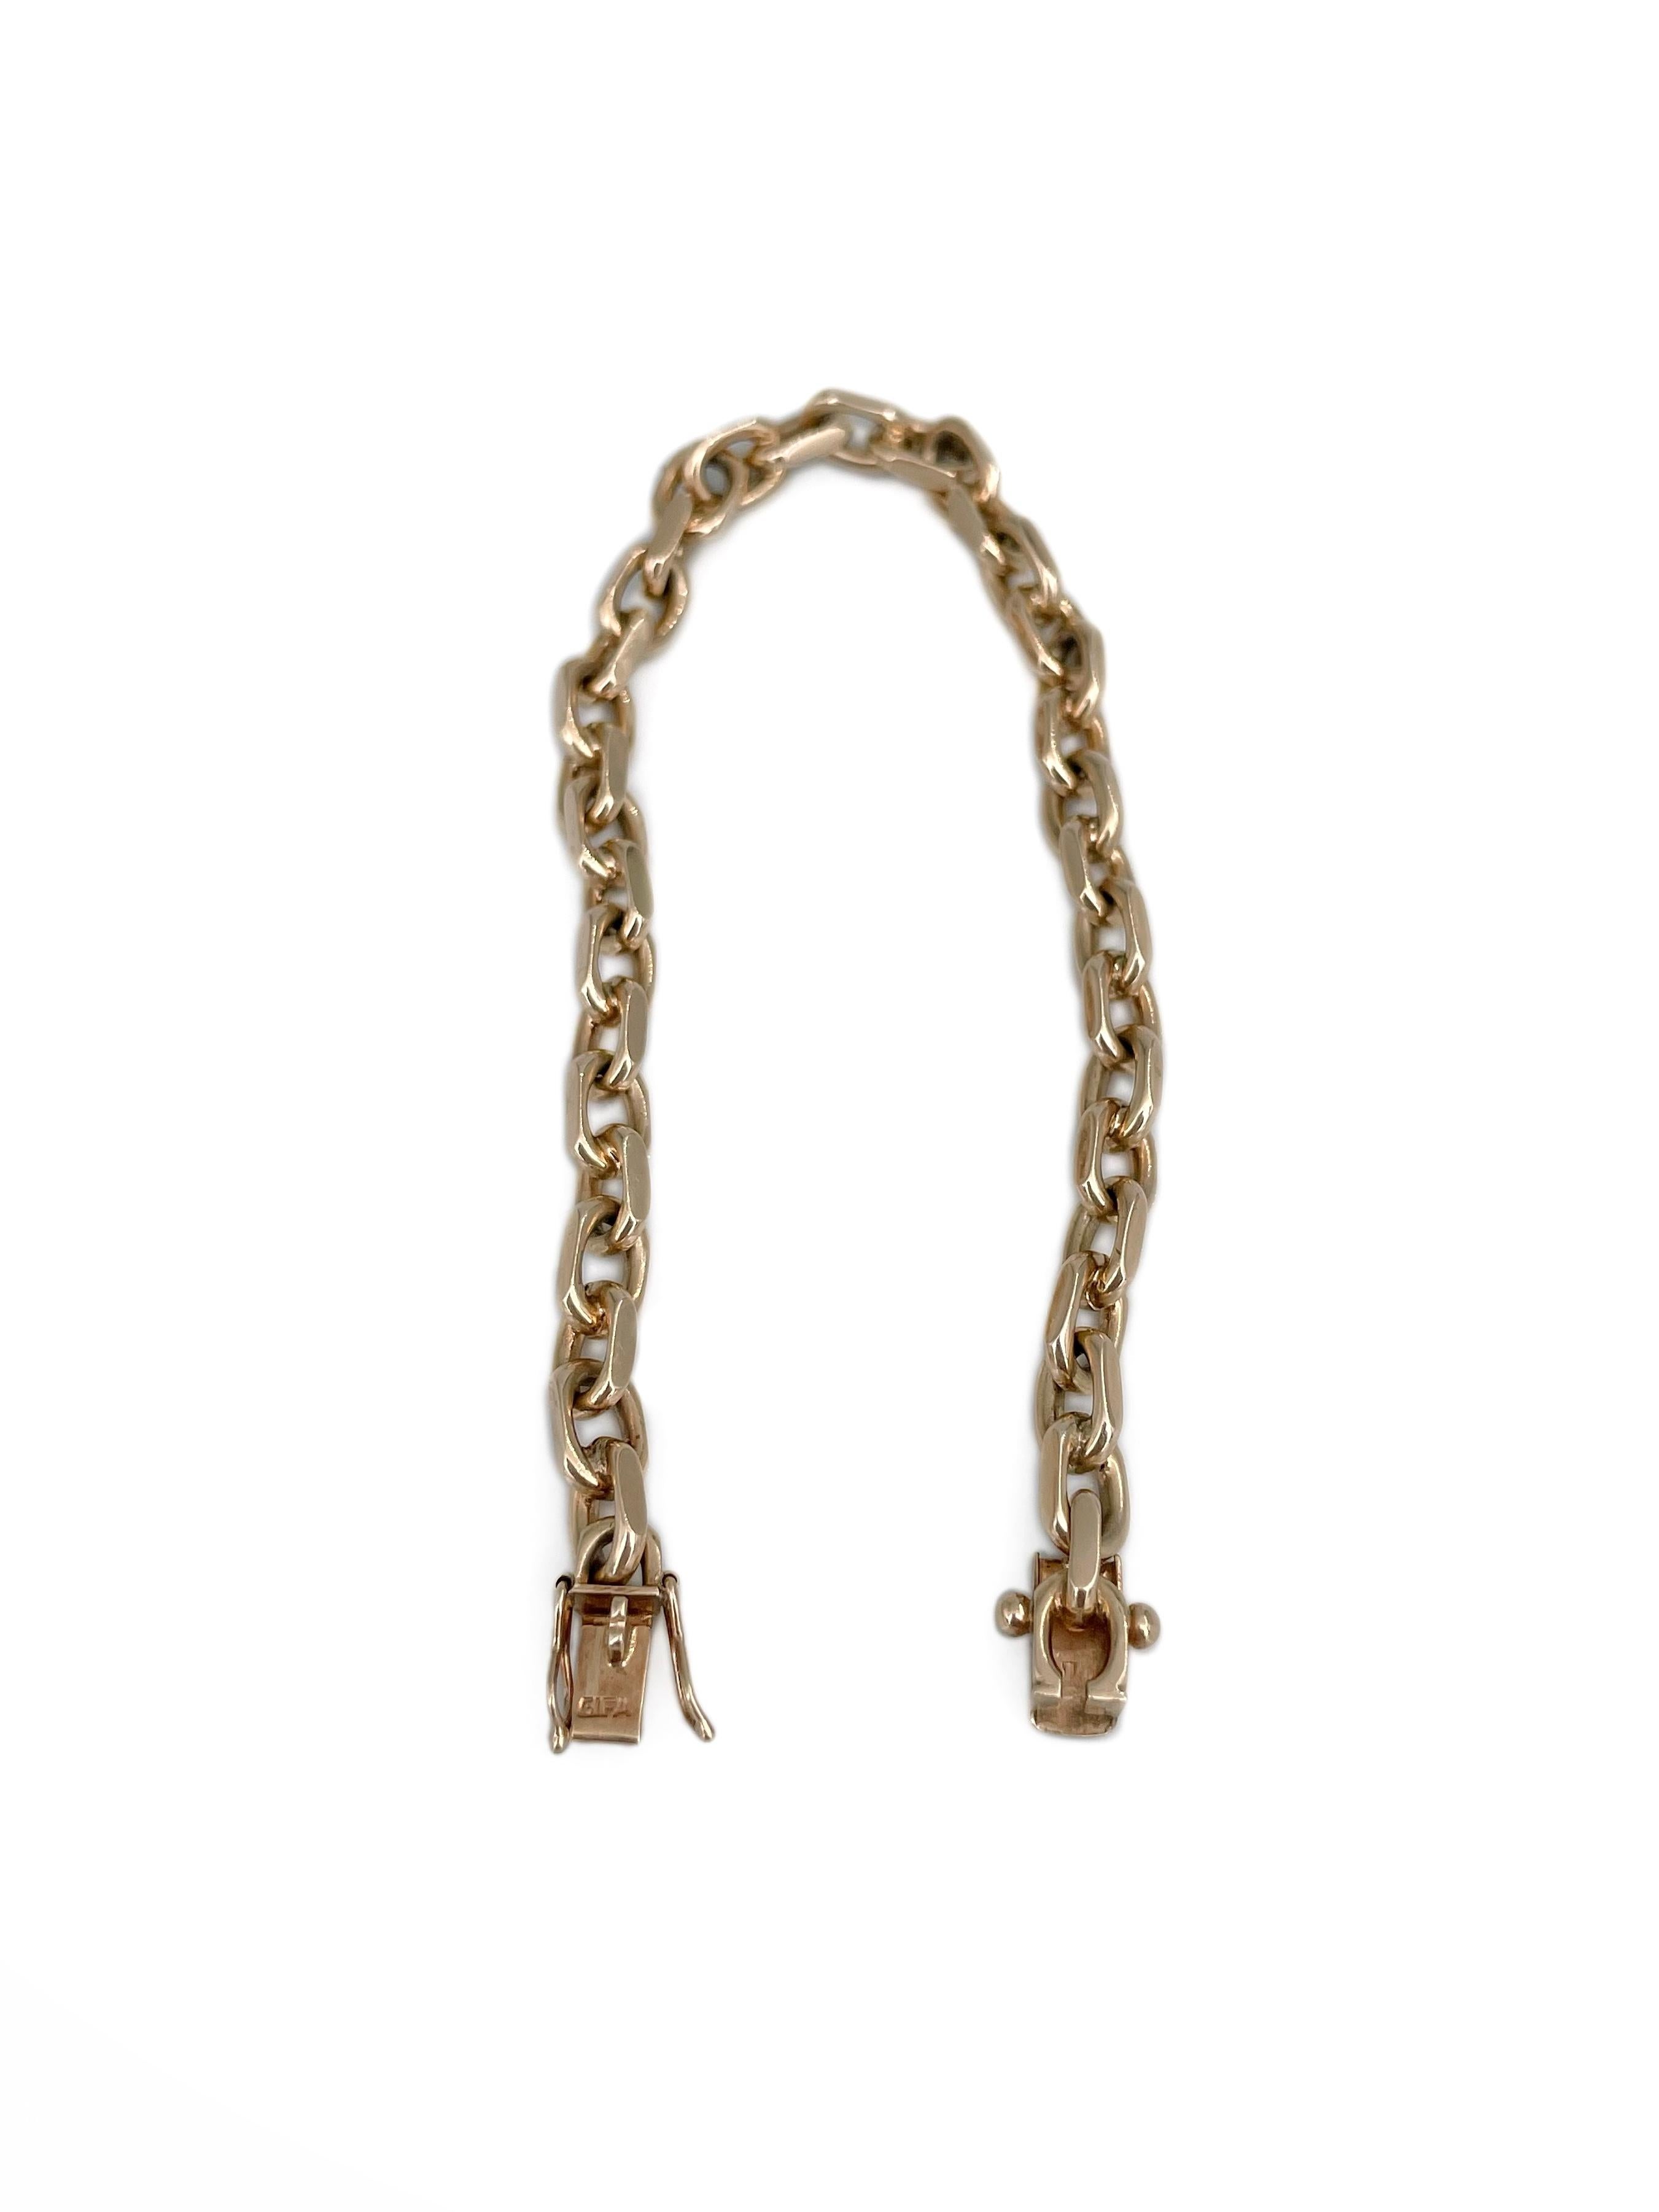 Modern Vintage 14 Karat Yellow Gold Link Chain Bracelet